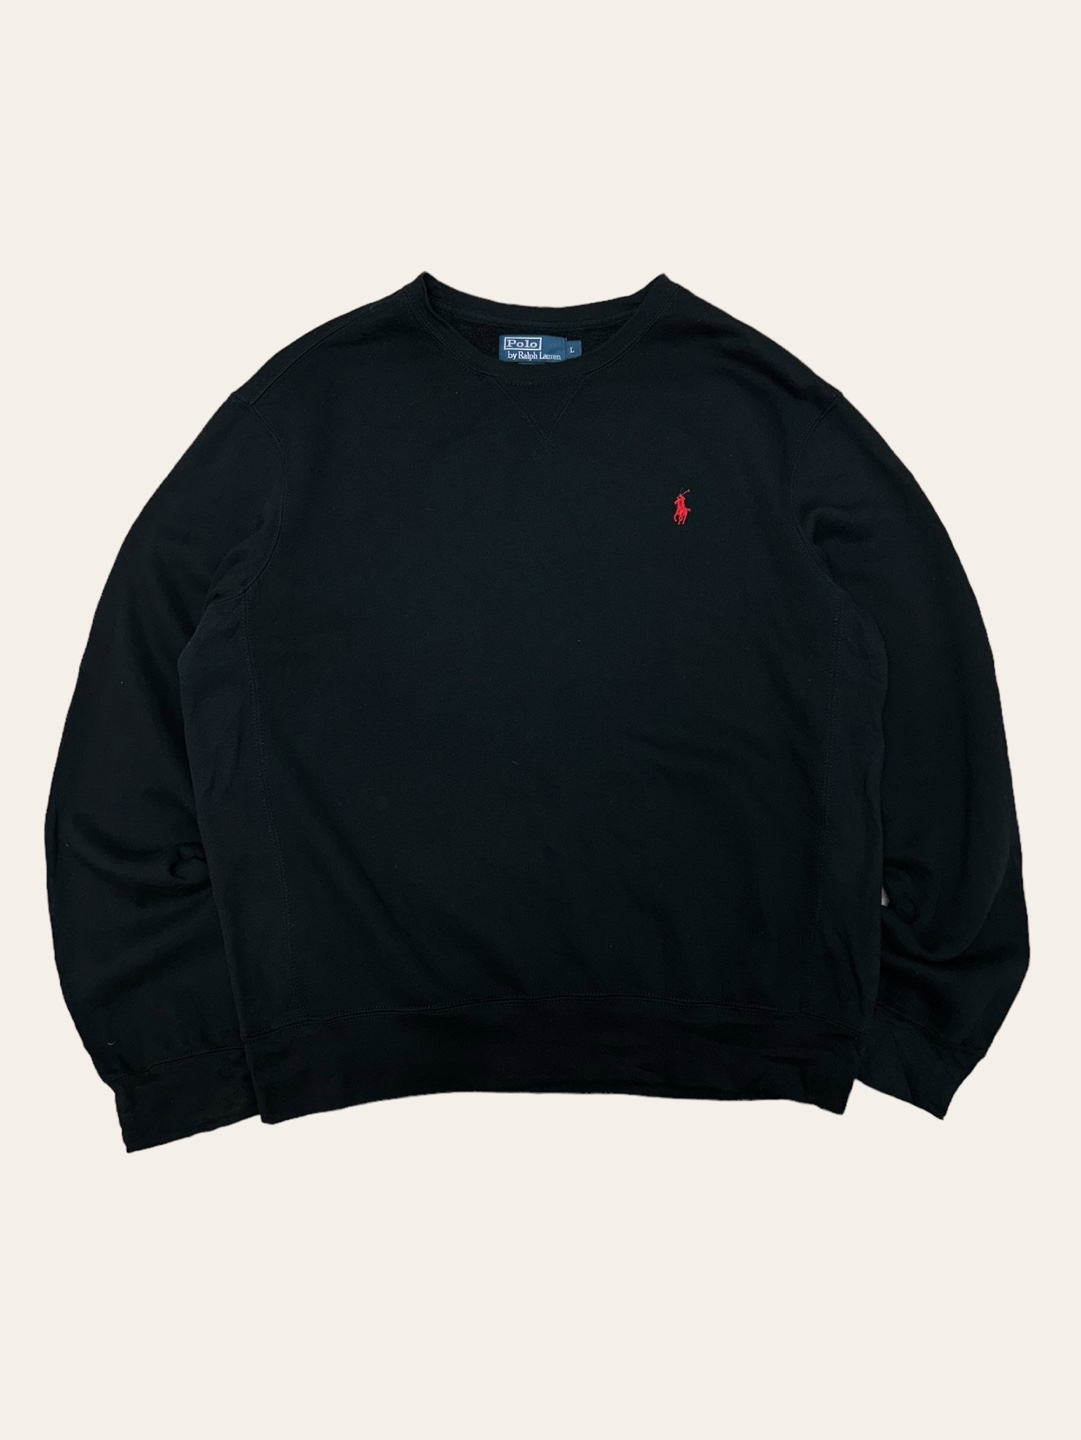 (From USA)Polo ralph lauren black cotton sweatshirt L